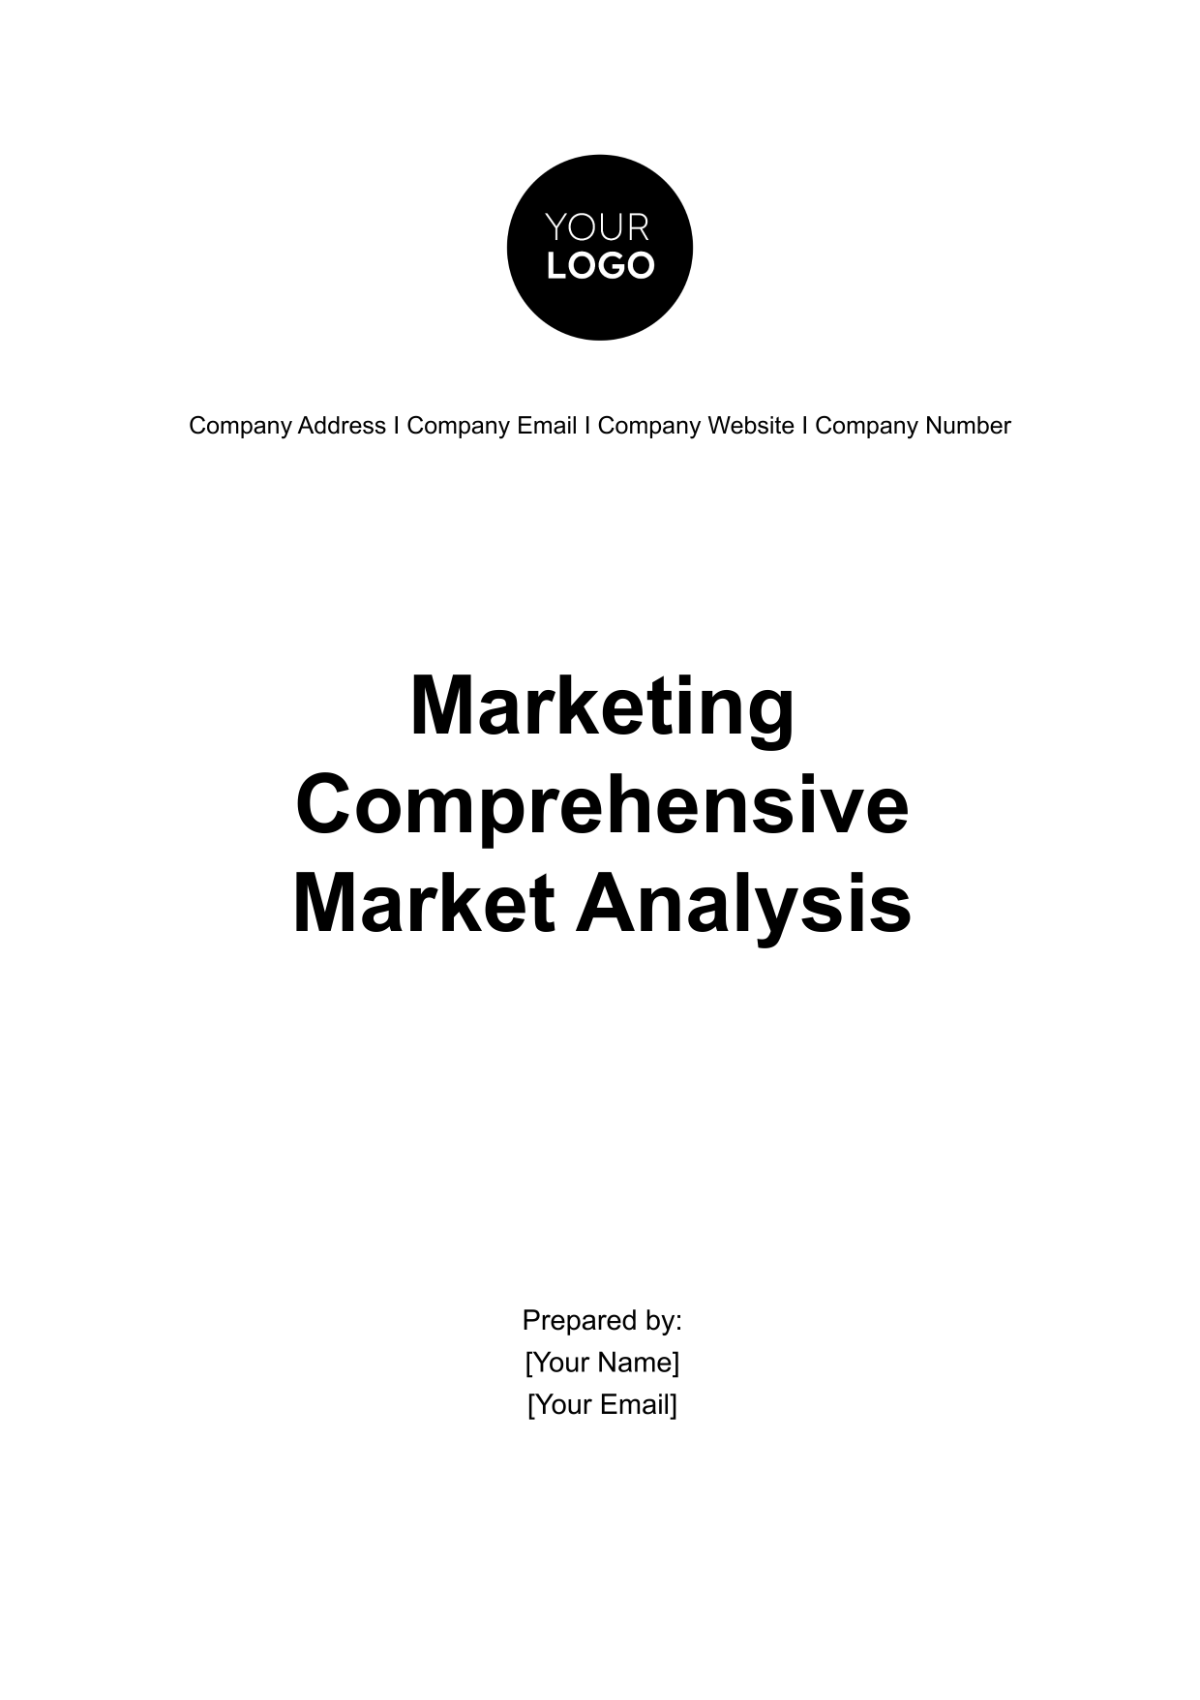 Free Marketing Comprehensive Market Analysis Template